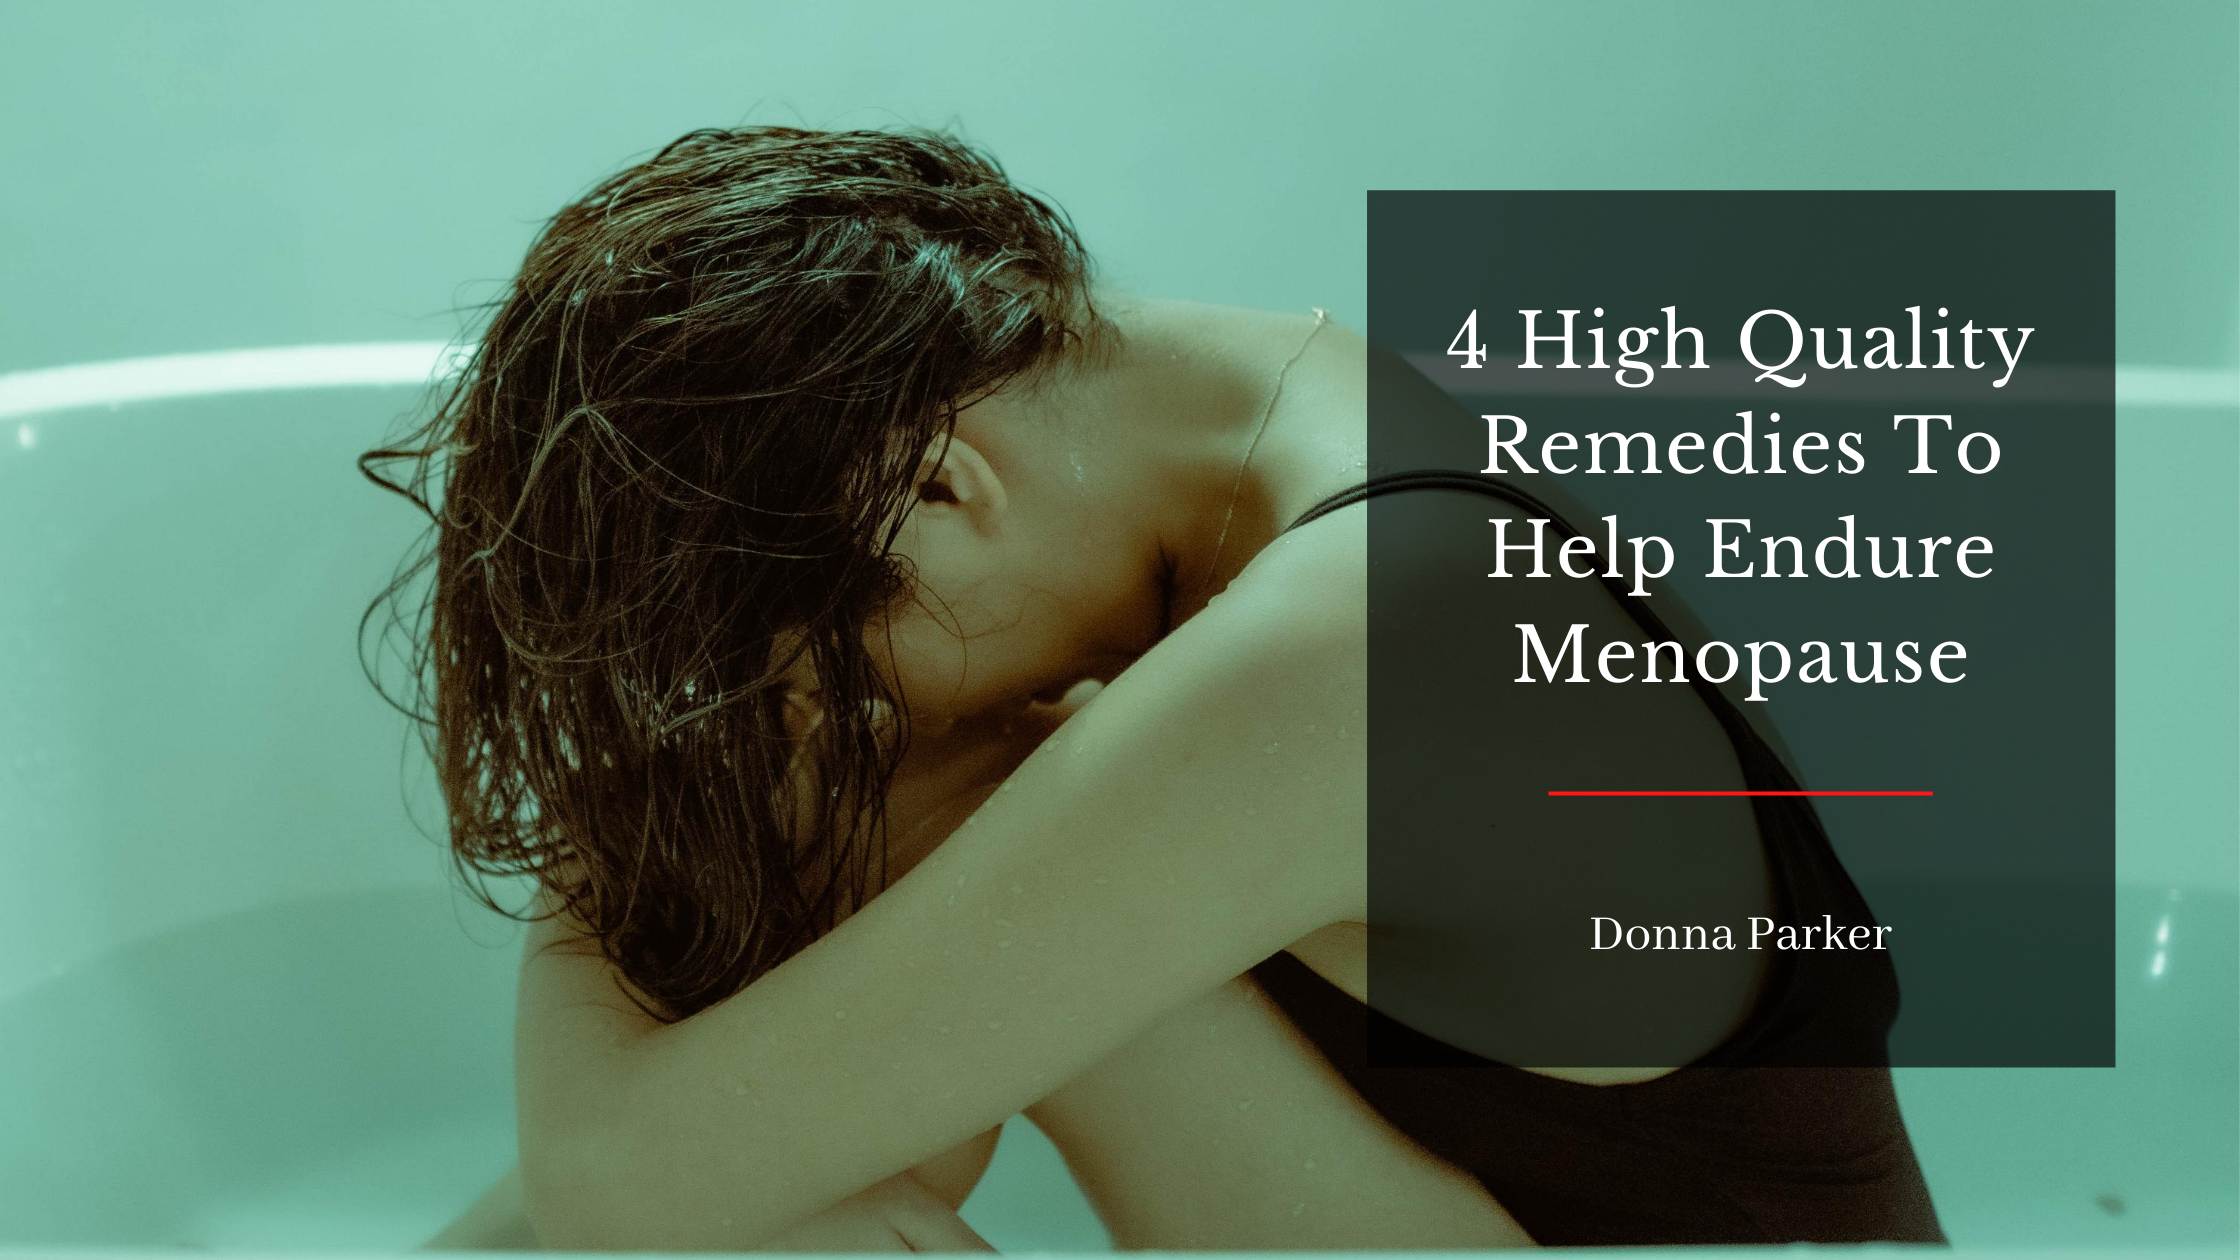 A woman sitting on a bath tub having 4 High Quality Remedies To Help Endure Menopause